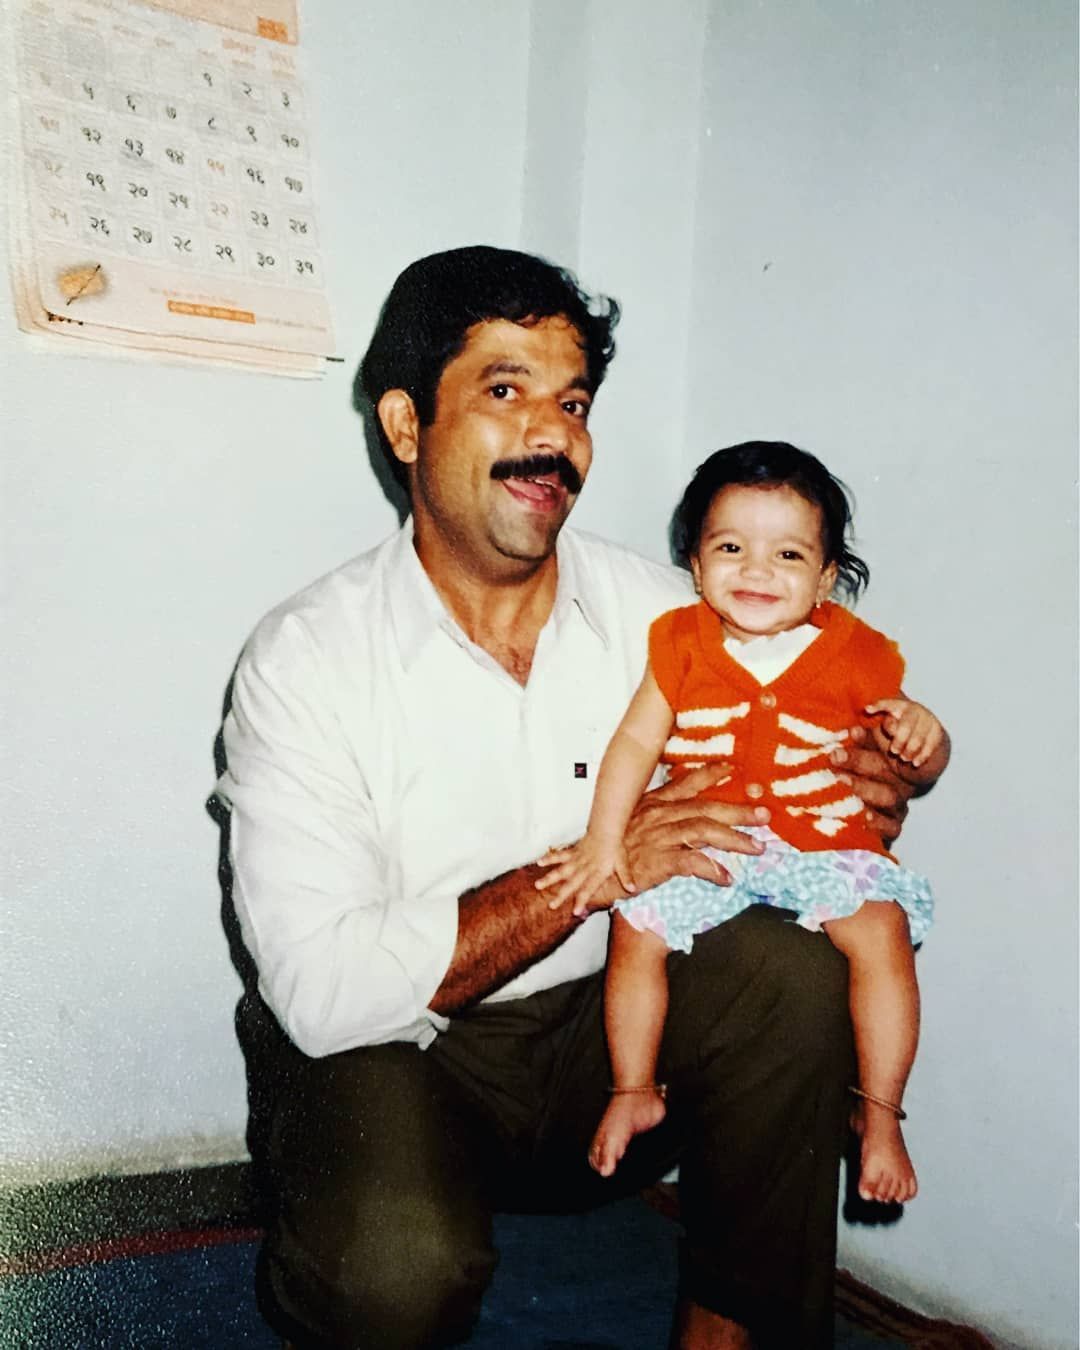 Julie Joglekar's childhood photo with her father